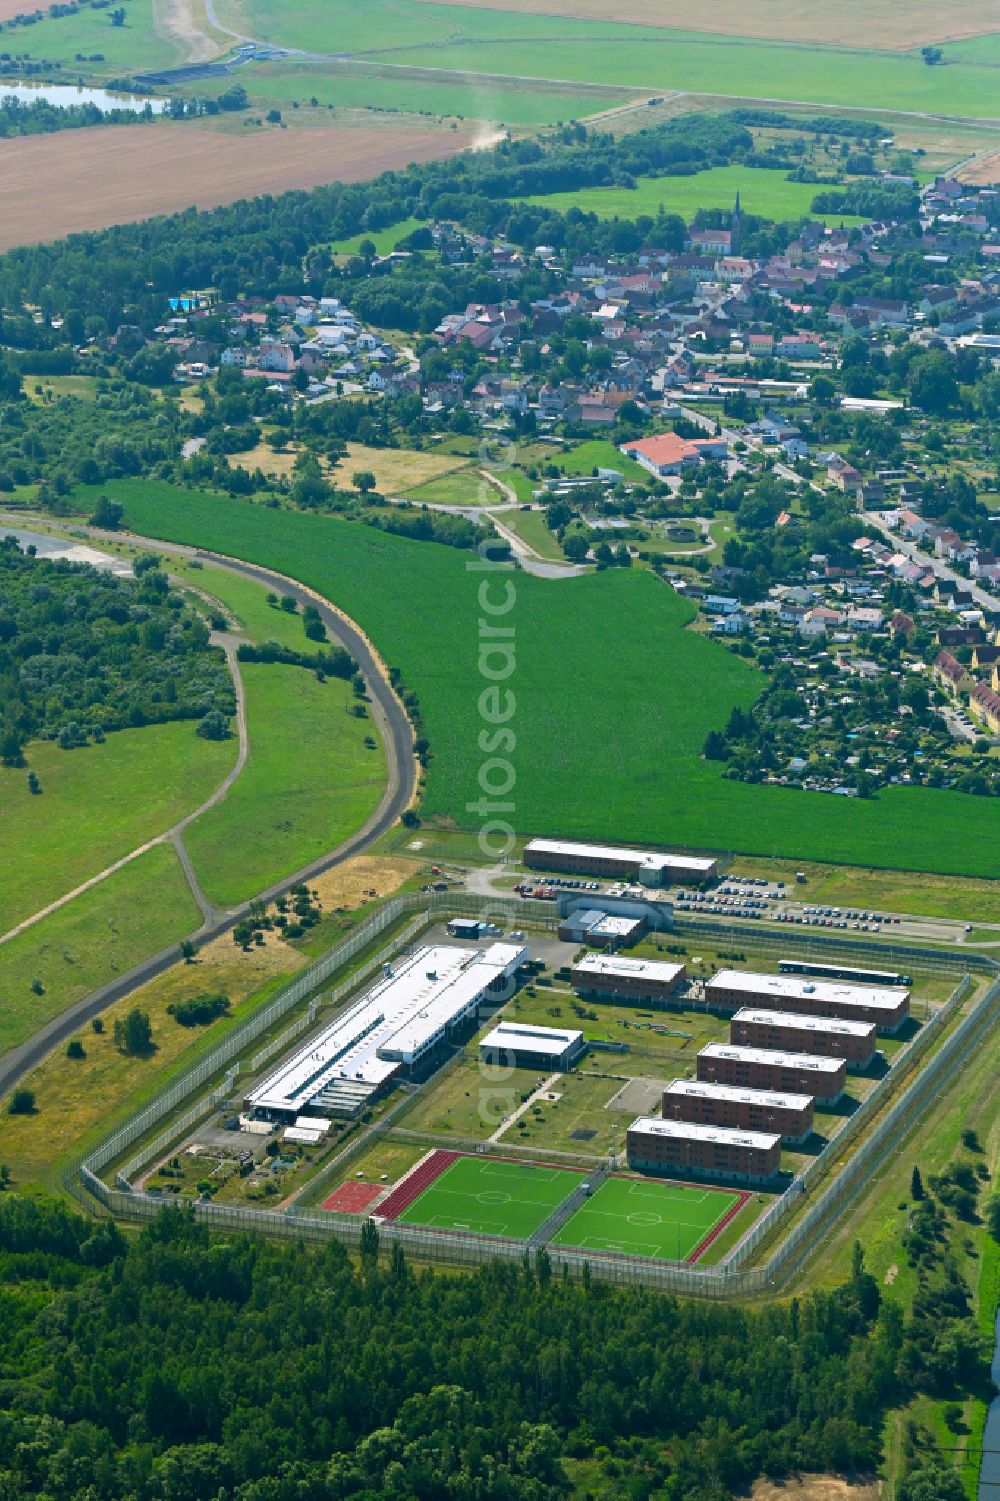 Aerial image Regis-Breitingen - Premises of the correctional facility detention center in Regis in Saxony